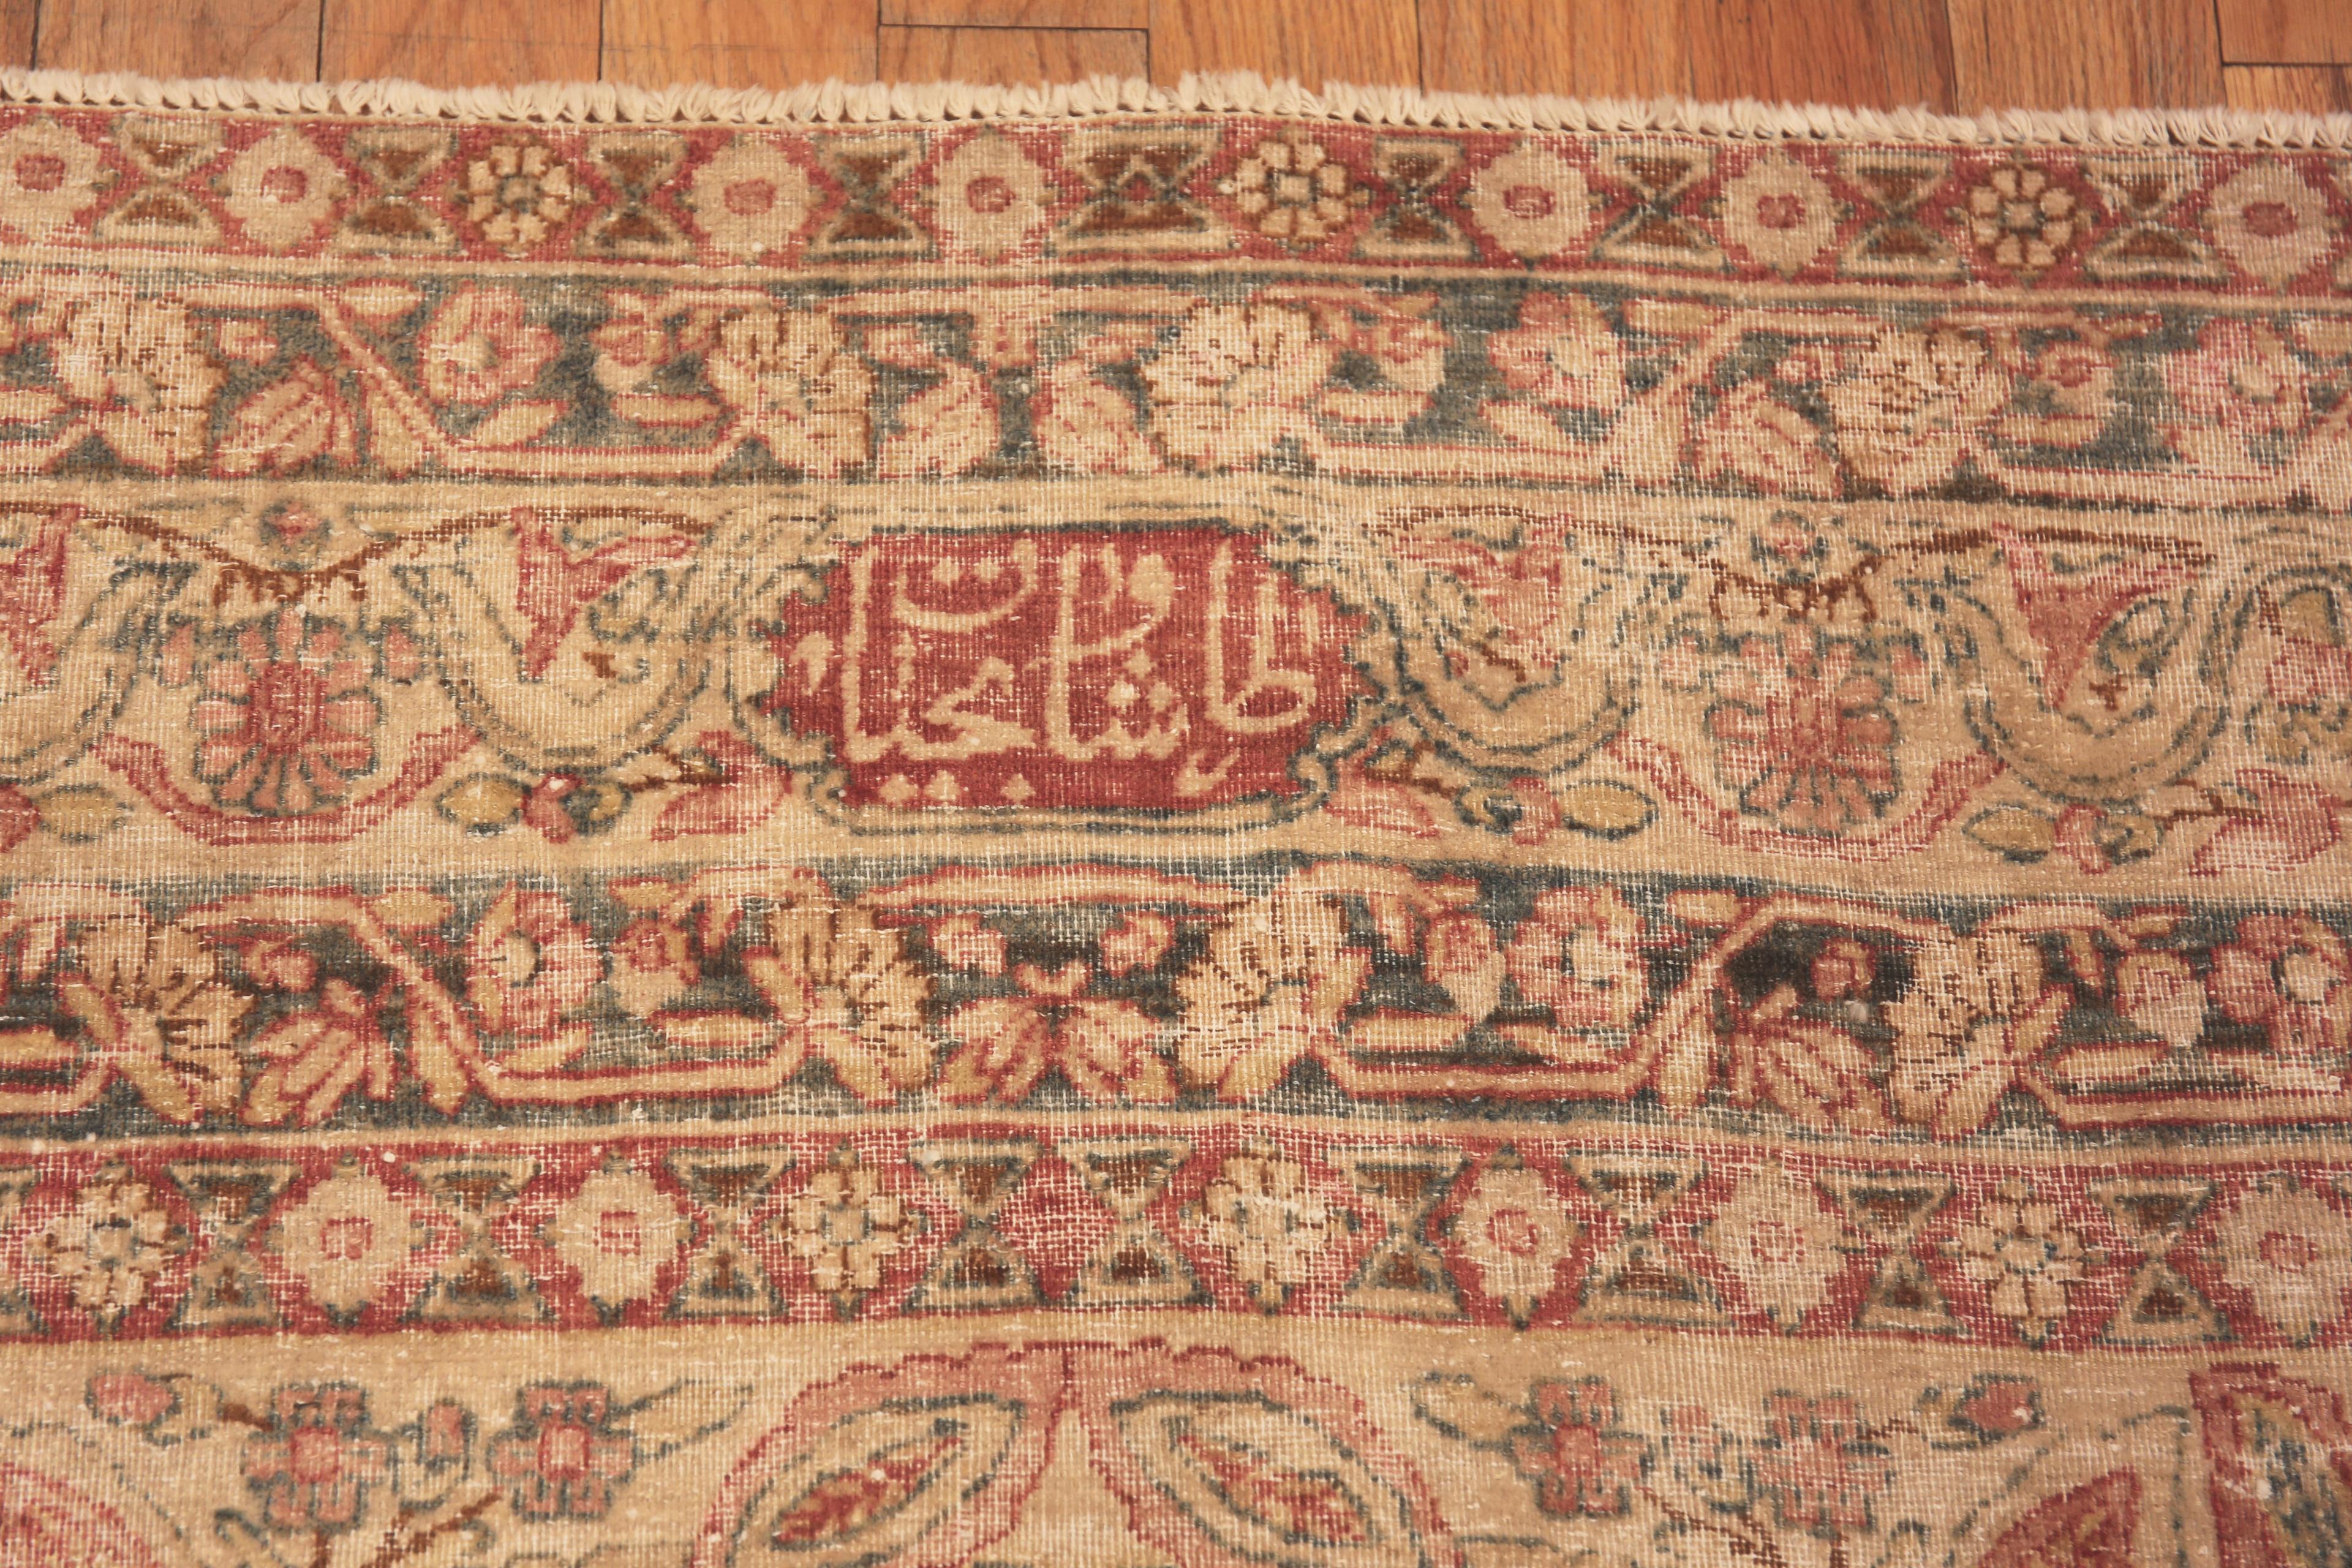 Kirman Antique Persian Kerman Rug Signed “Taftanchian”. 6 ft 8 in x 8 ft 8 in  For Sale